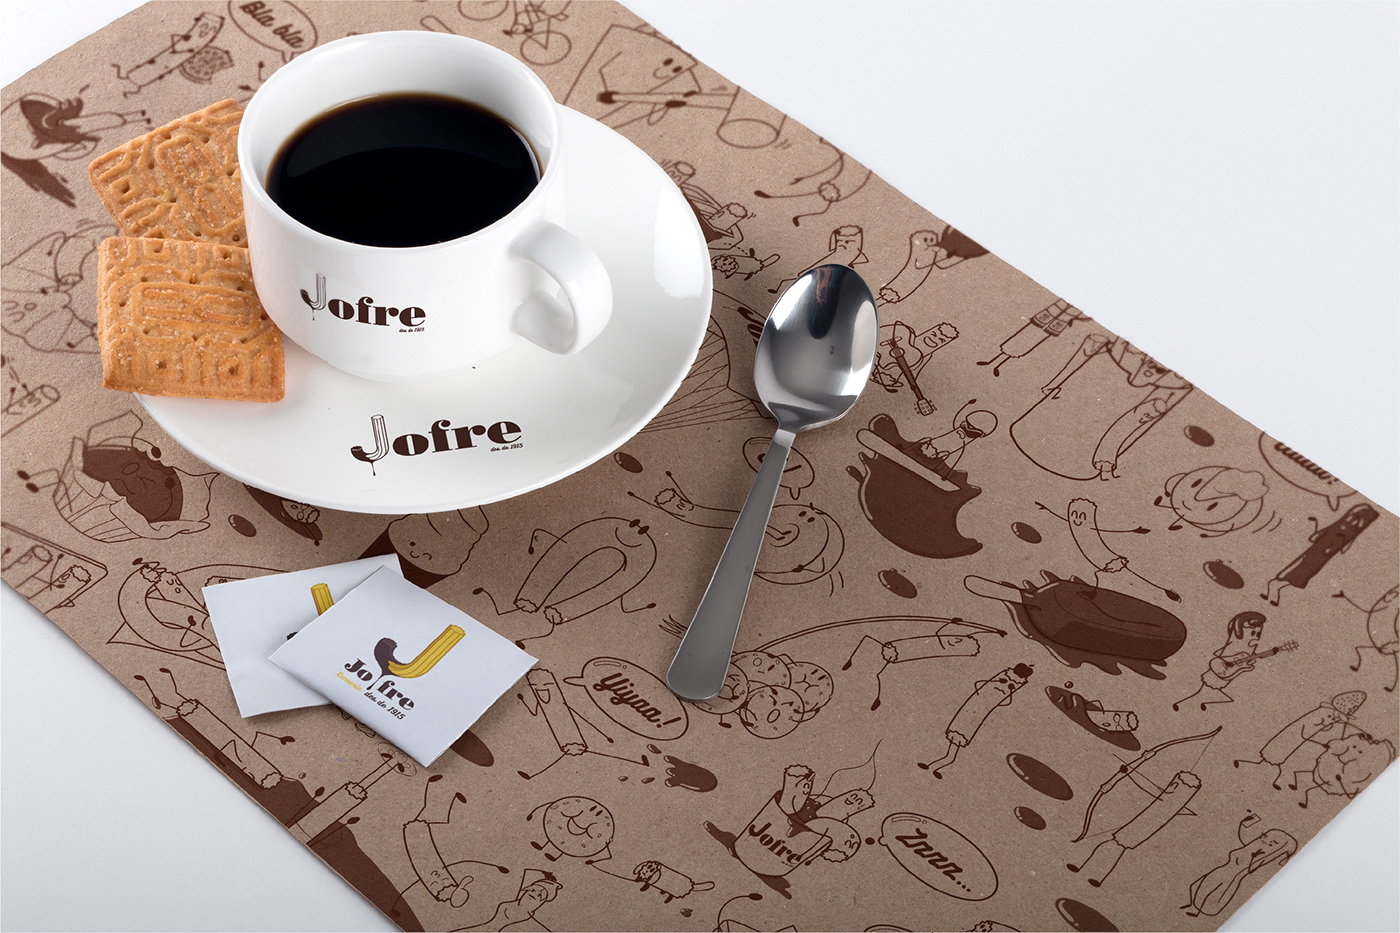 Churreria . churro . churros . branding . illustration . original . coffee shop . Graphic Design .